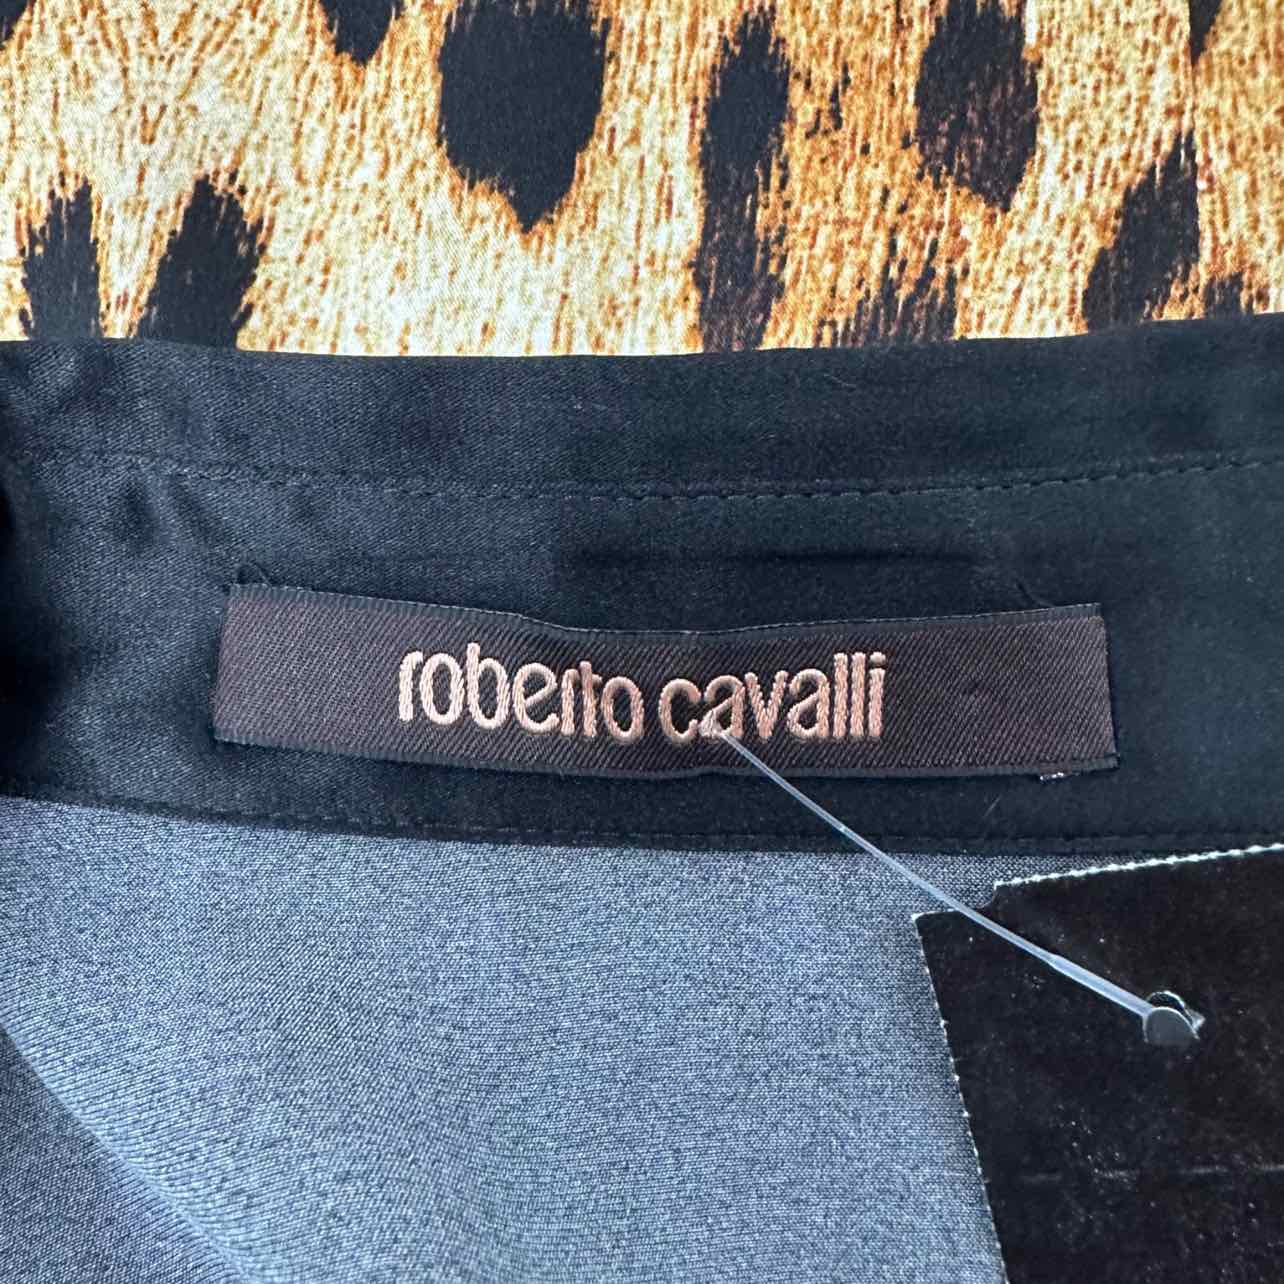 Roberto Cavalli Silk Cheetah Button Down Size 46